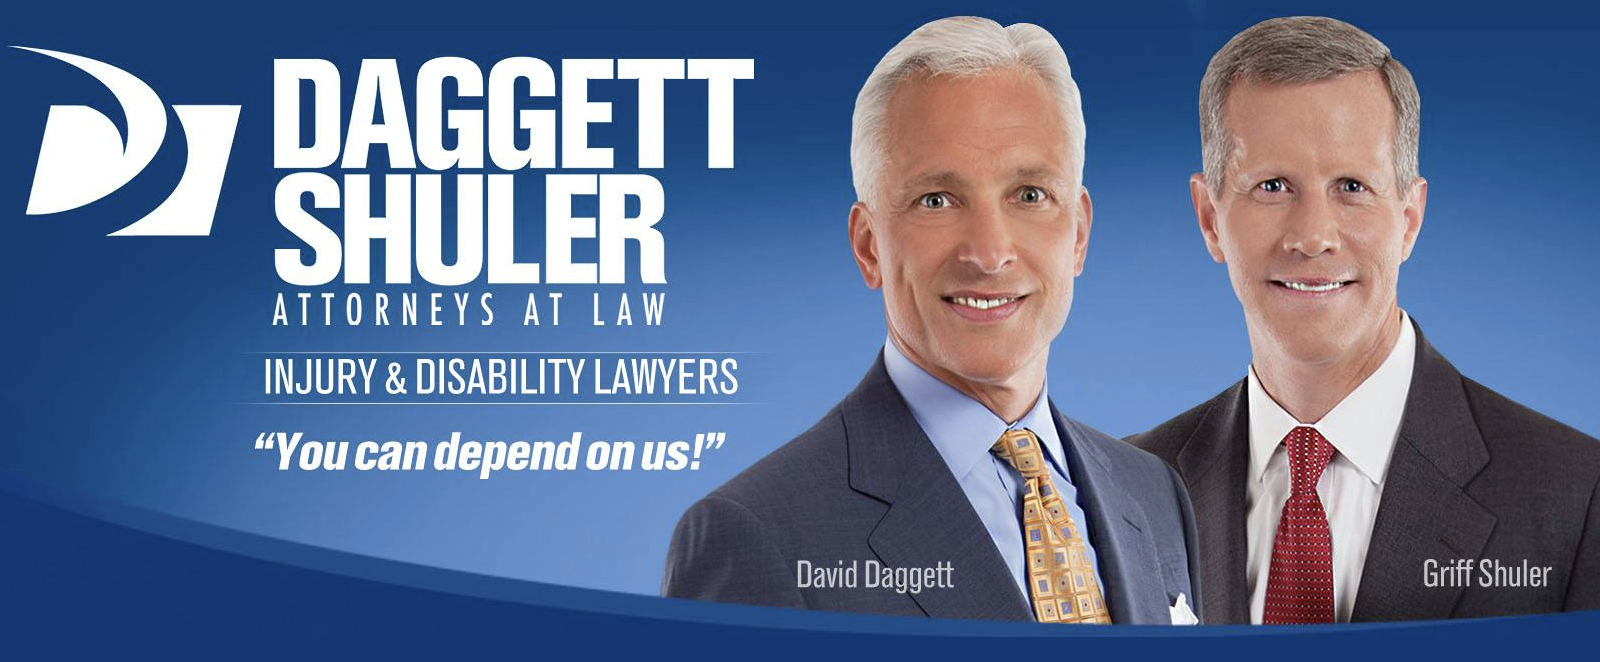 Daggett Shuler Attorneys At Law - Winston Salem, NC